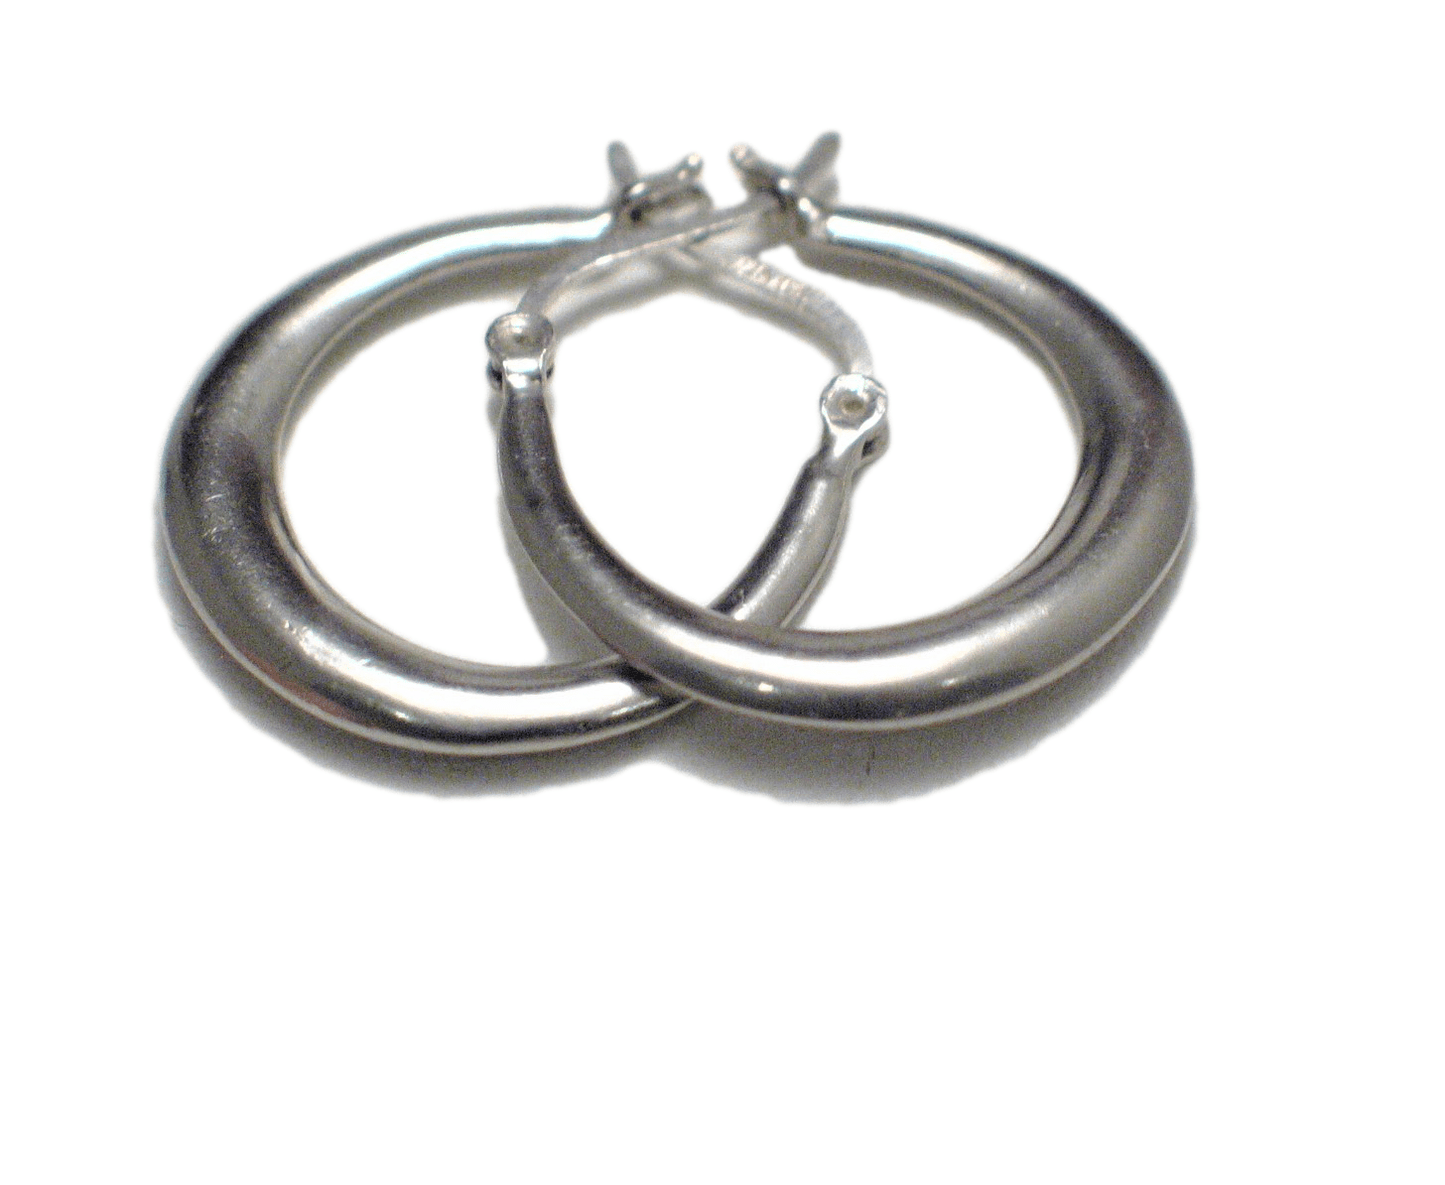 Hoop Earrings | Pre-Owned Fashionable Sterling Silver Horseshoe Style Hoop Earrings- Blingschlingers Jewelry